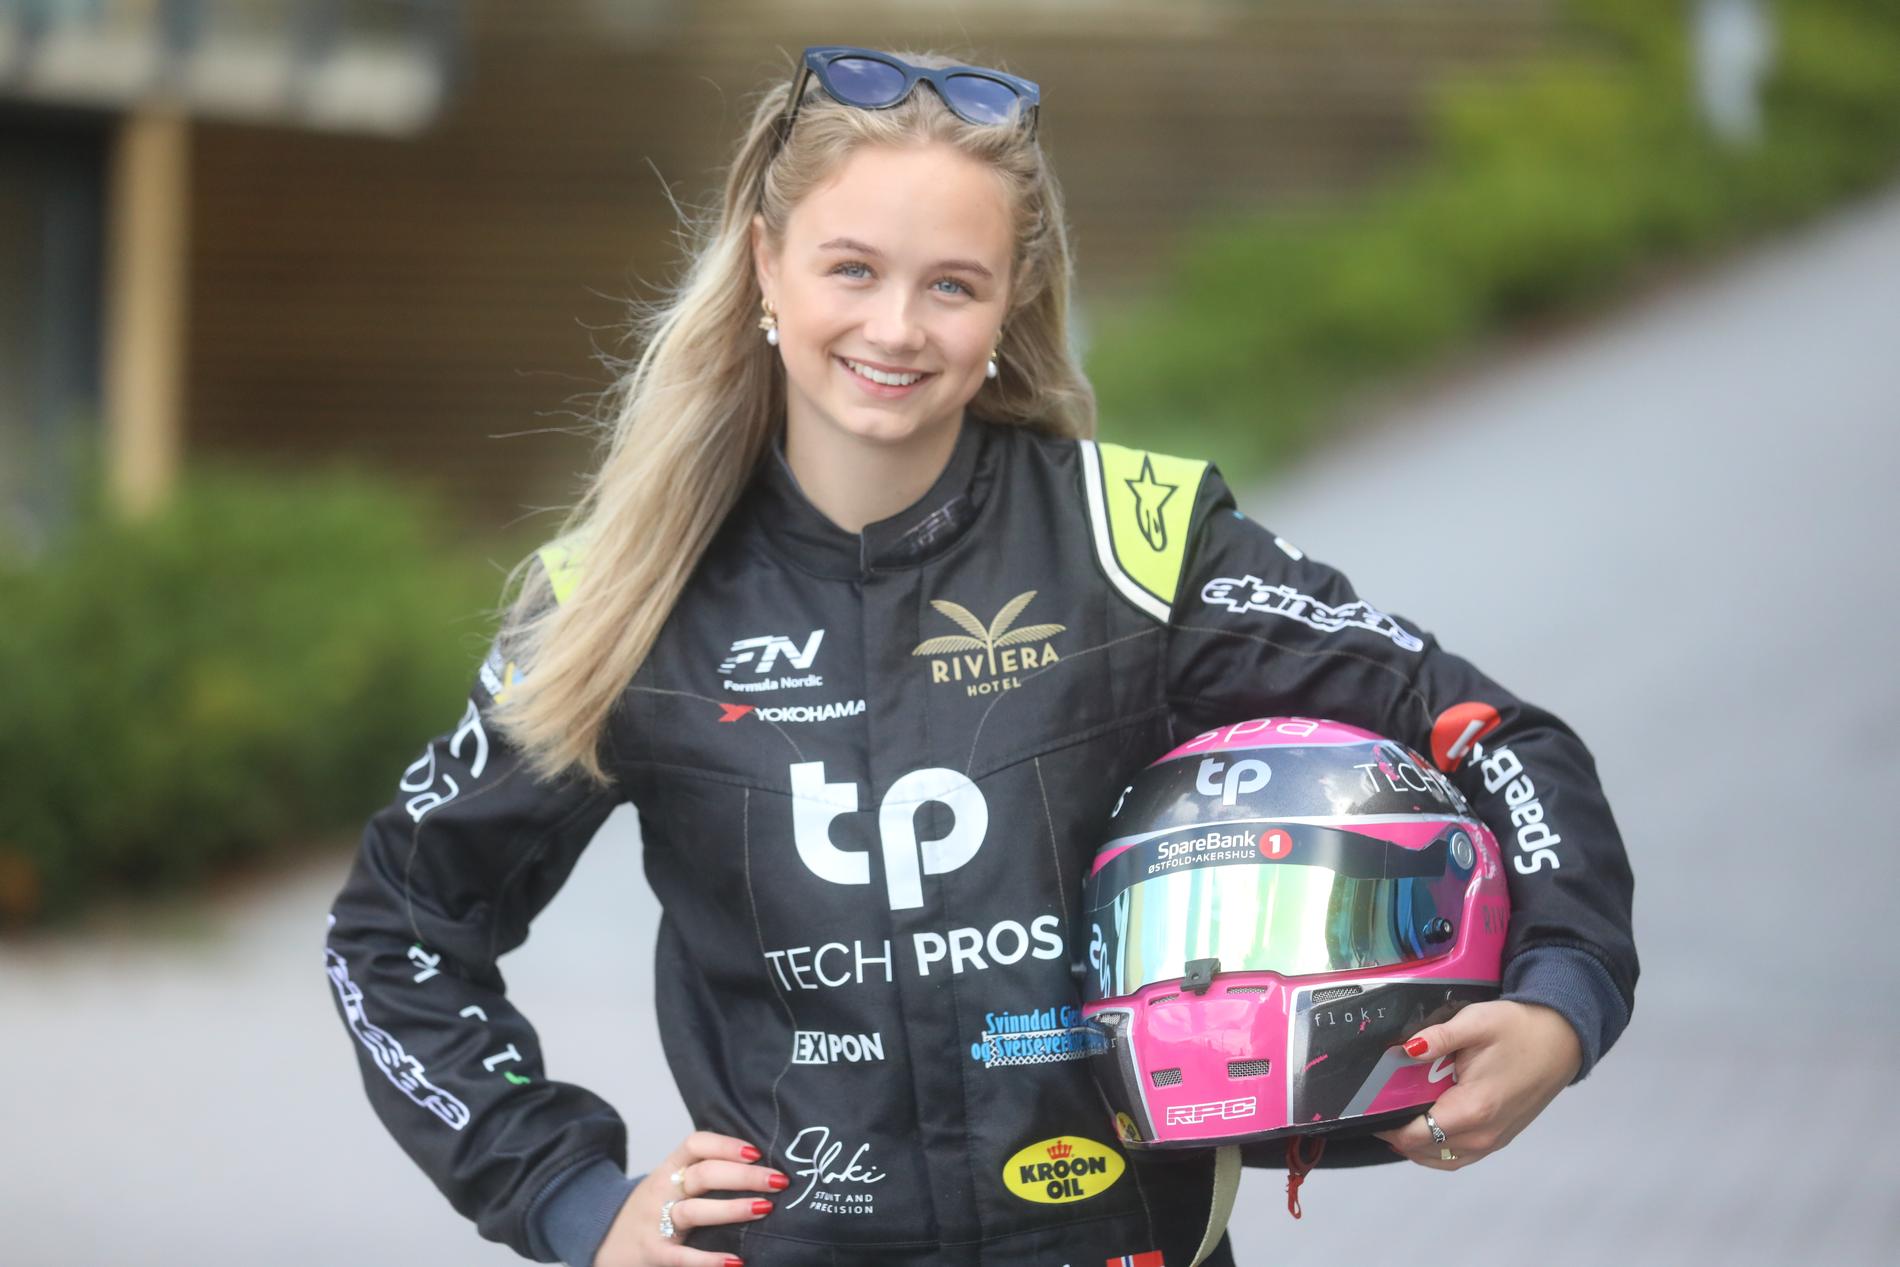 Lilo Elise Veriliff is betting on the Formula One Academy